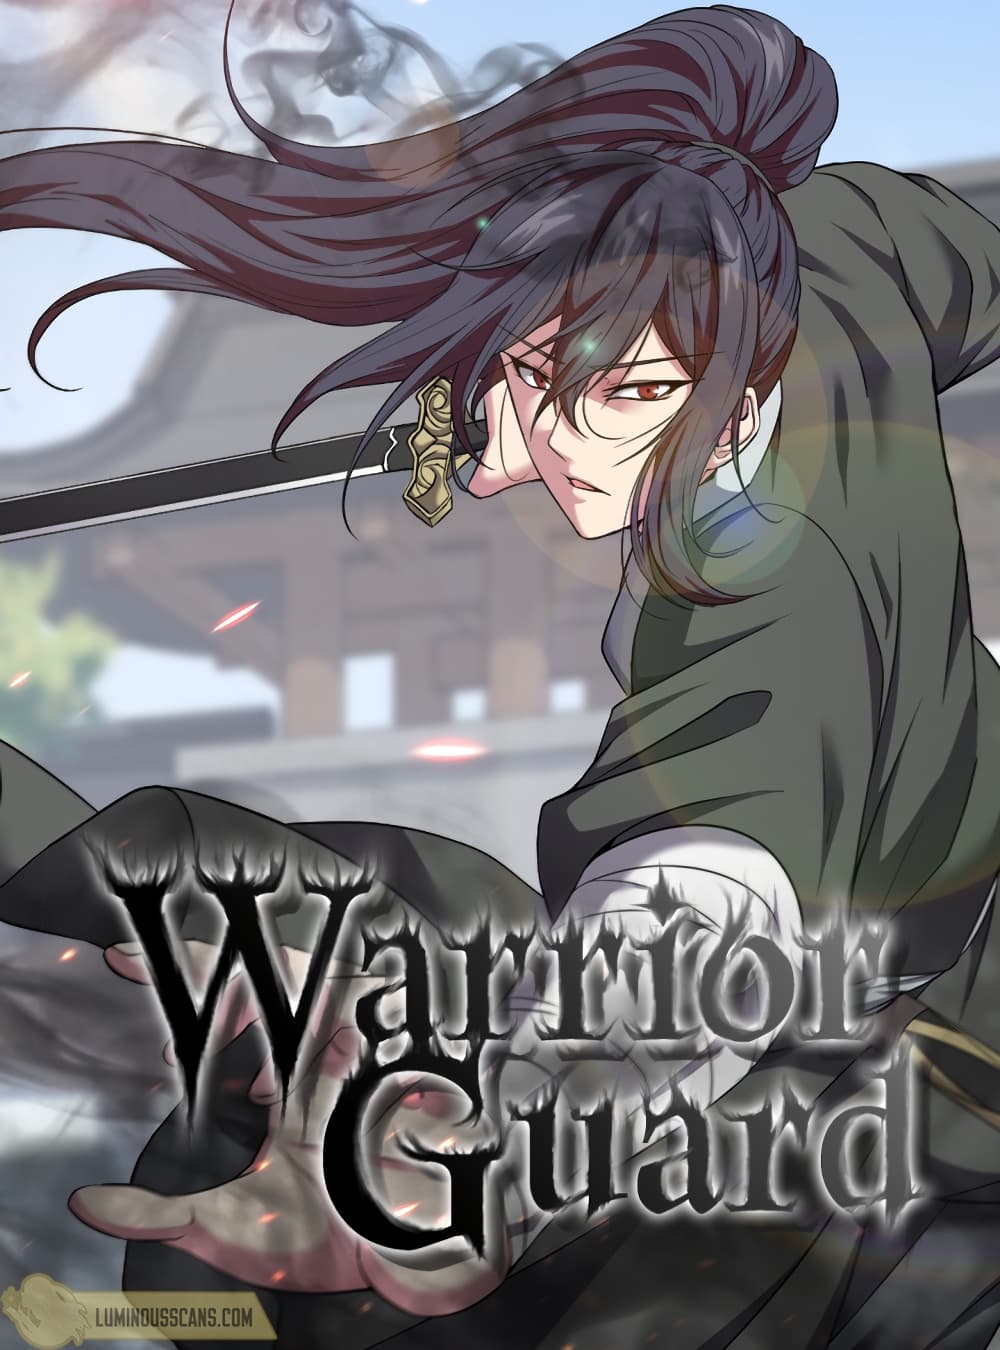 Warrior Guard 18-18